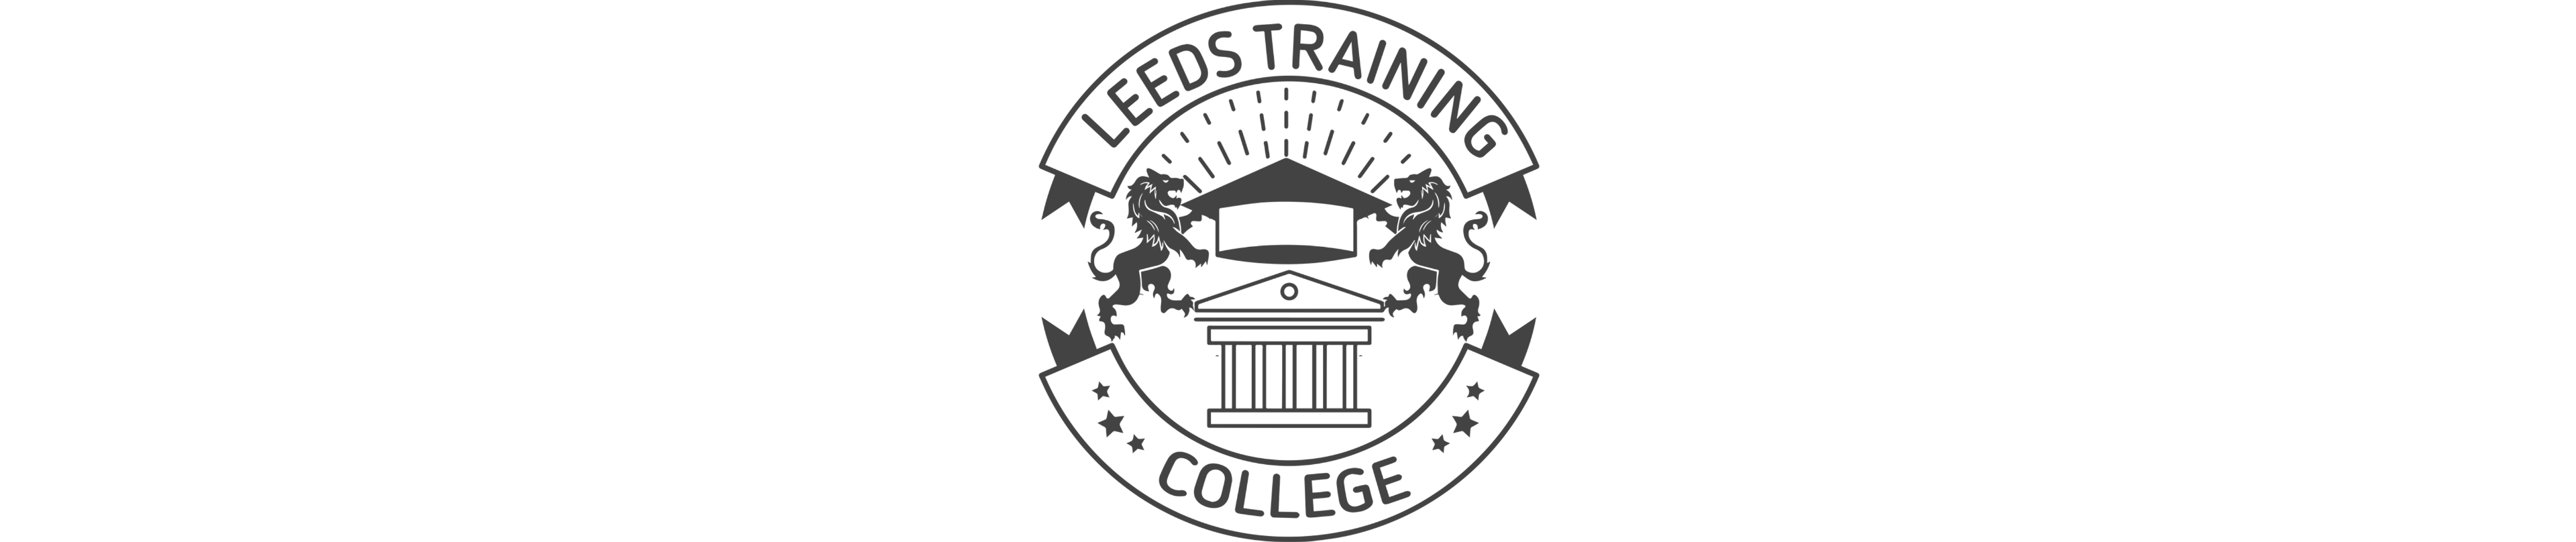 Leeds Training College logo